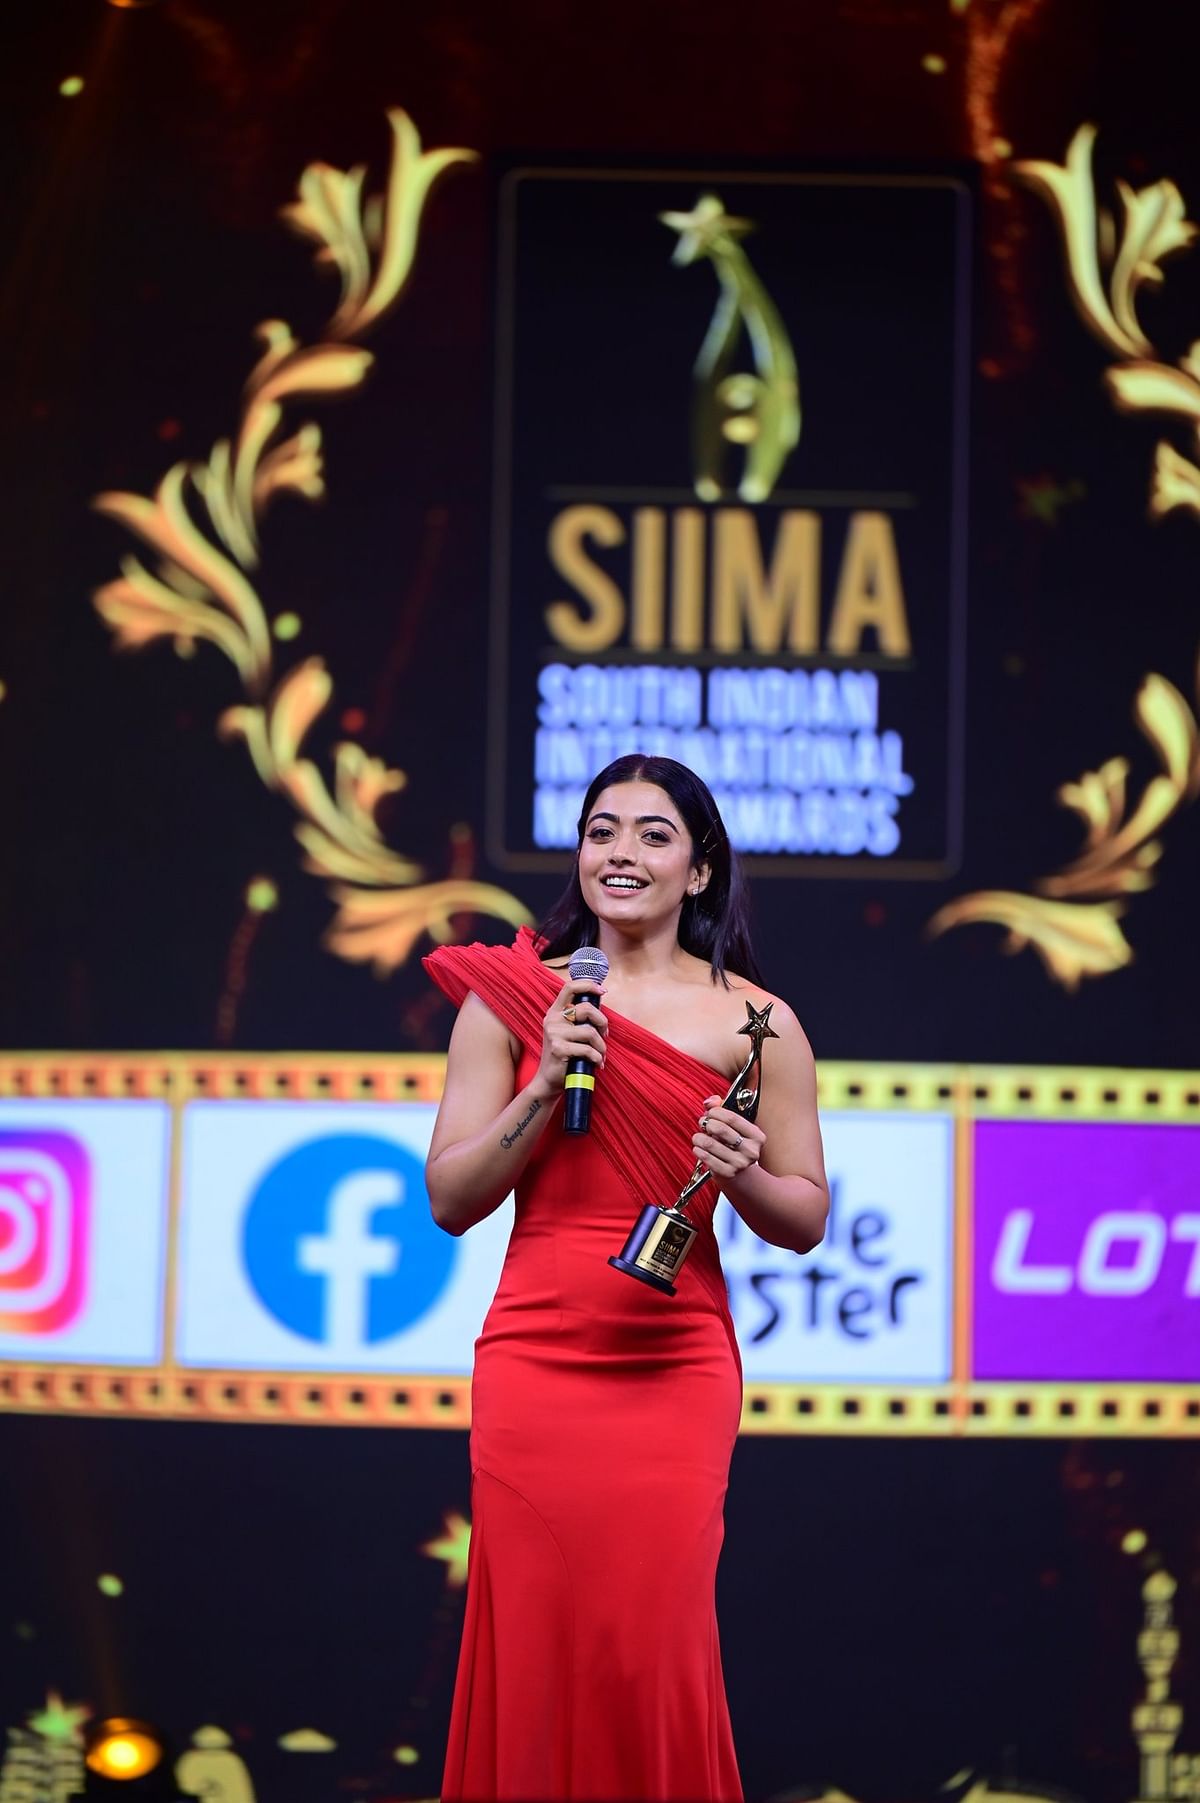 PHOTOS | 'SIIMA' ಪ್ರಶಸ್ತಿ ಪ್ರದಾನ ಸಮಾರಂಭ: ಕನ್ನಡದ ನಟ ನಟಿಯರ ಕಲರವ